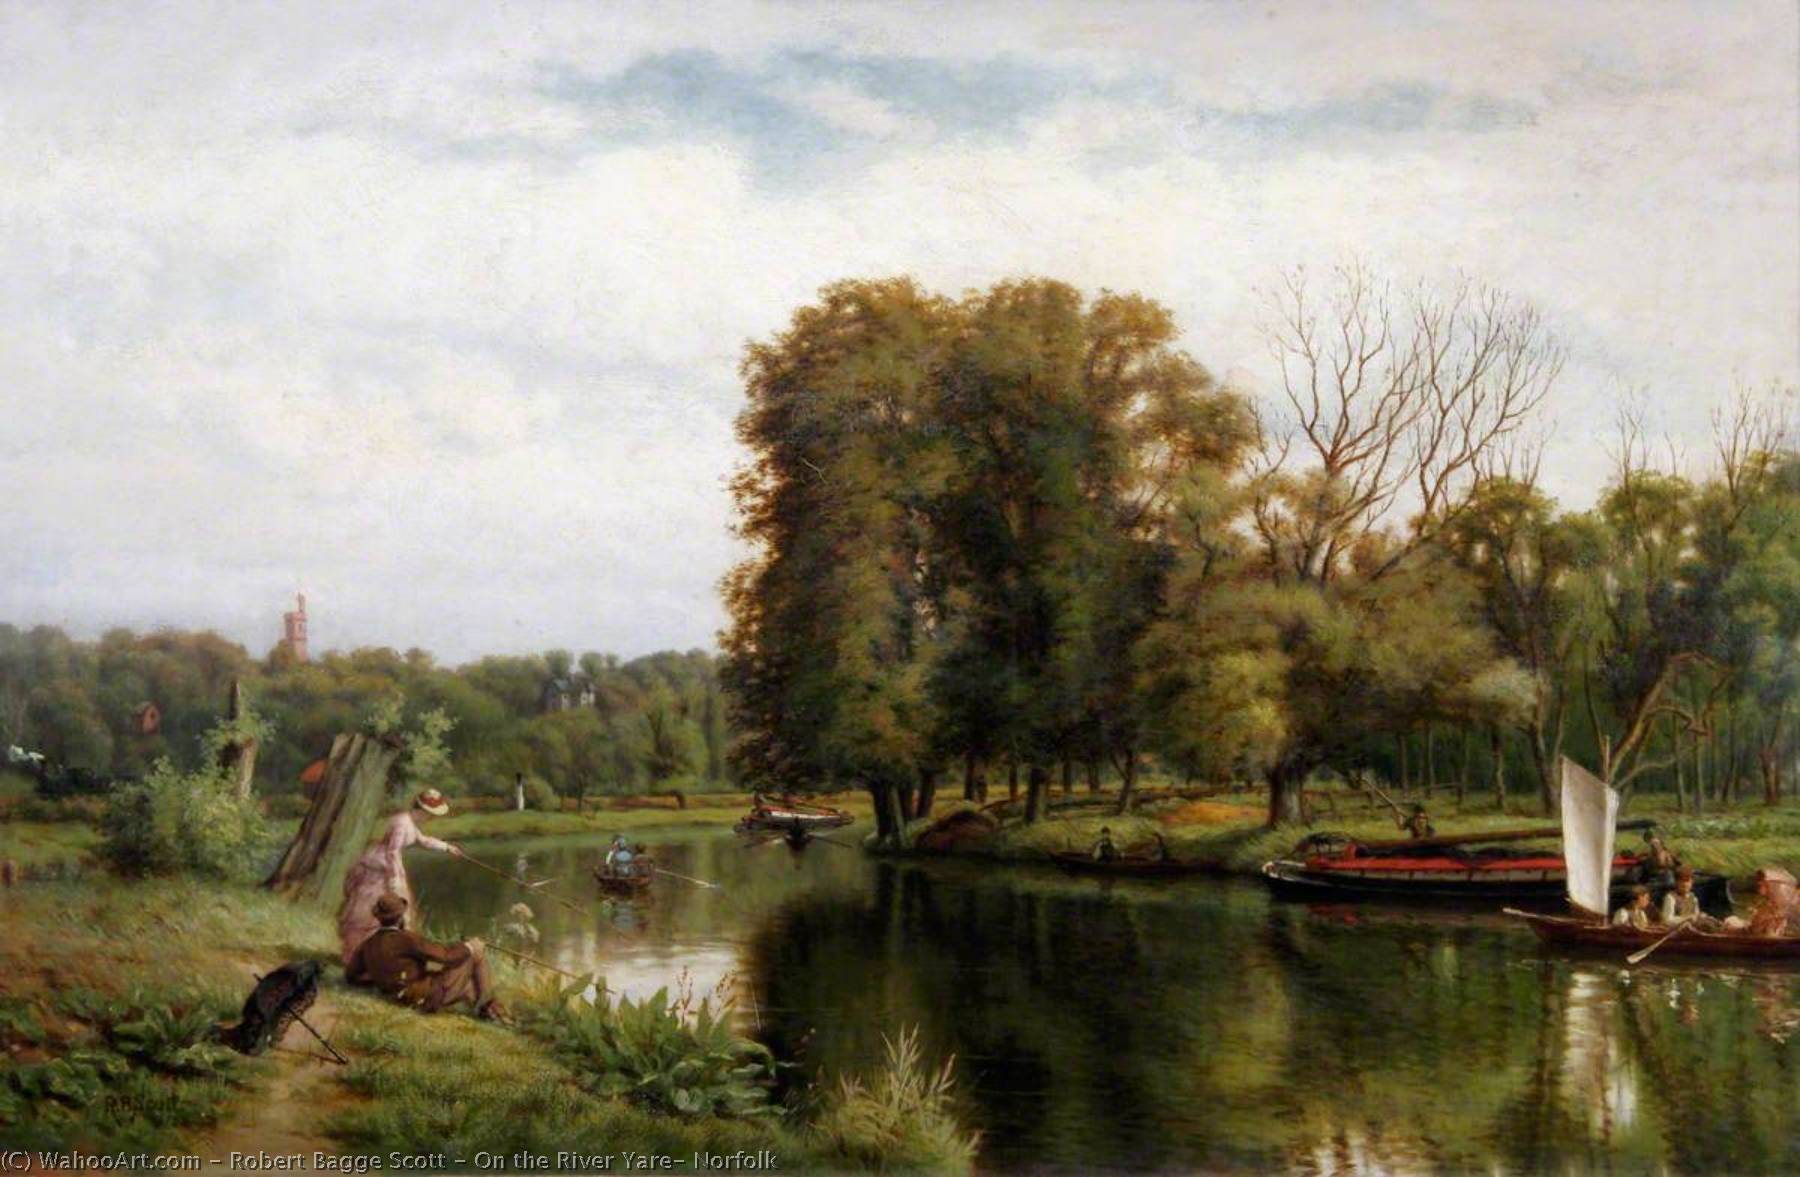 On the River Yare, Norfolk, 1883 by Robert Bagge Scott Robert Bagge Scott | ArtsDot.com